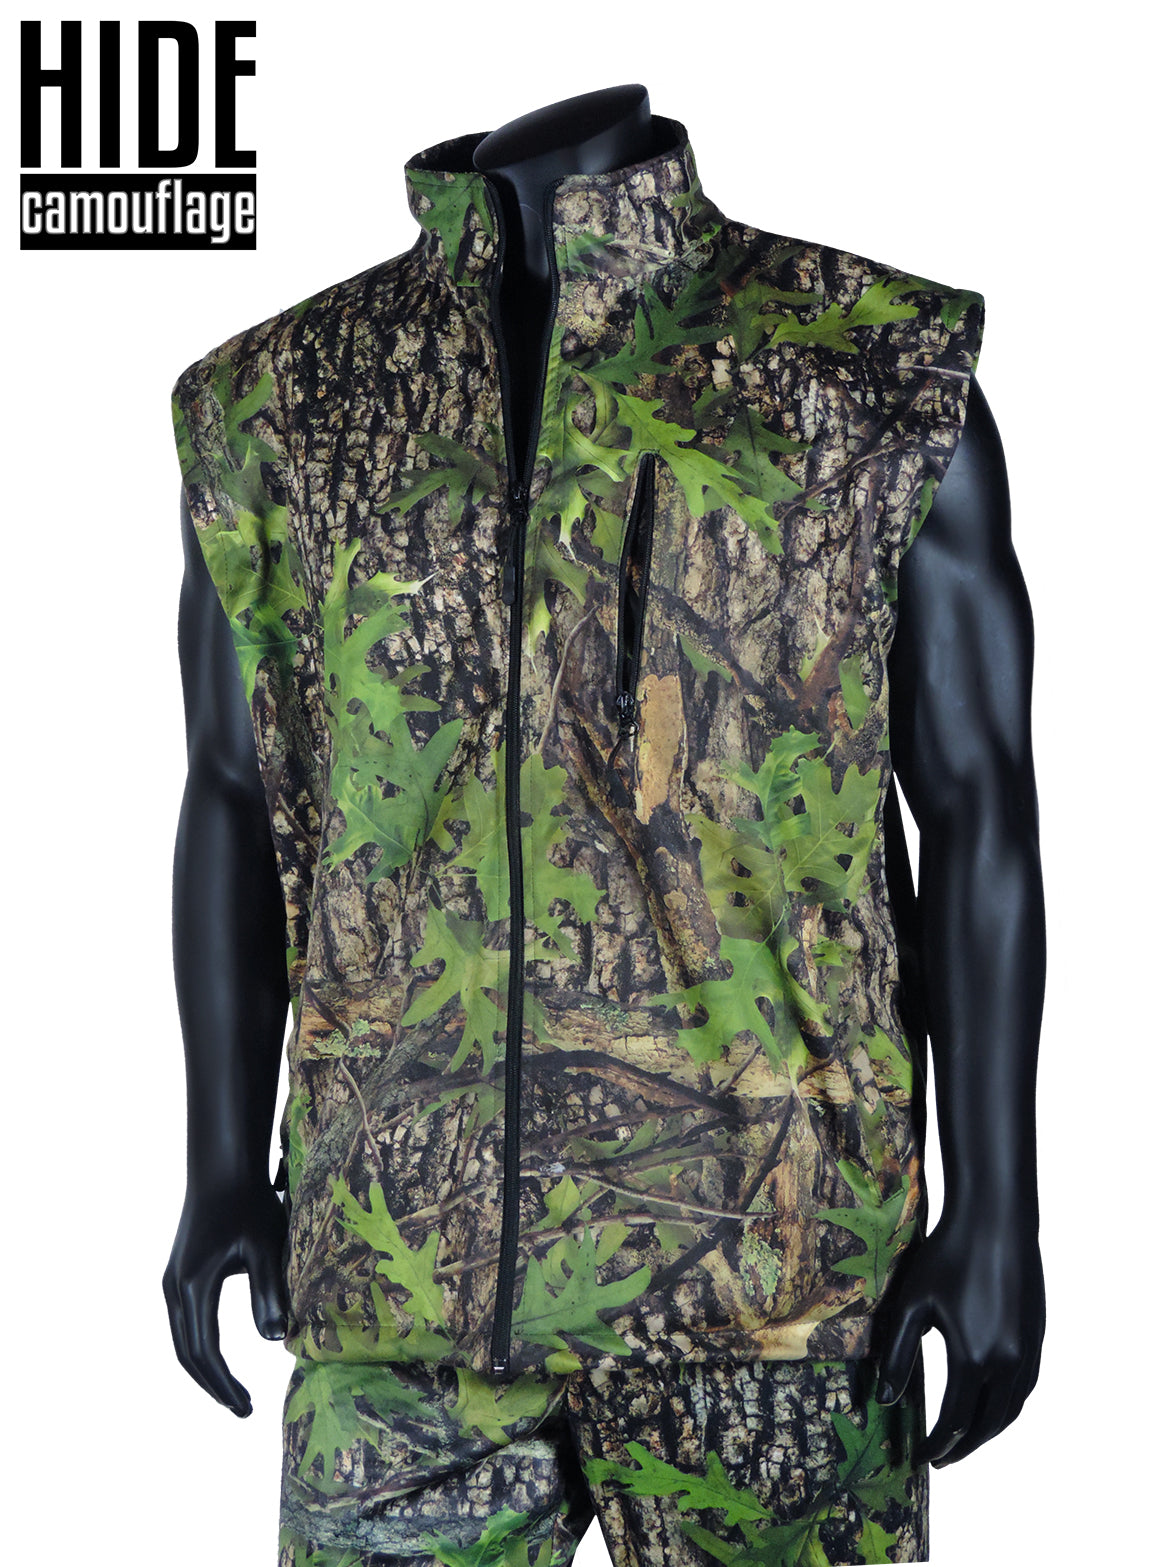 hide camouflage camo waterproof water resistant ambush series early season oak bark woodland green leaf deer turkey hunt hunting outerwear lifestyle vest